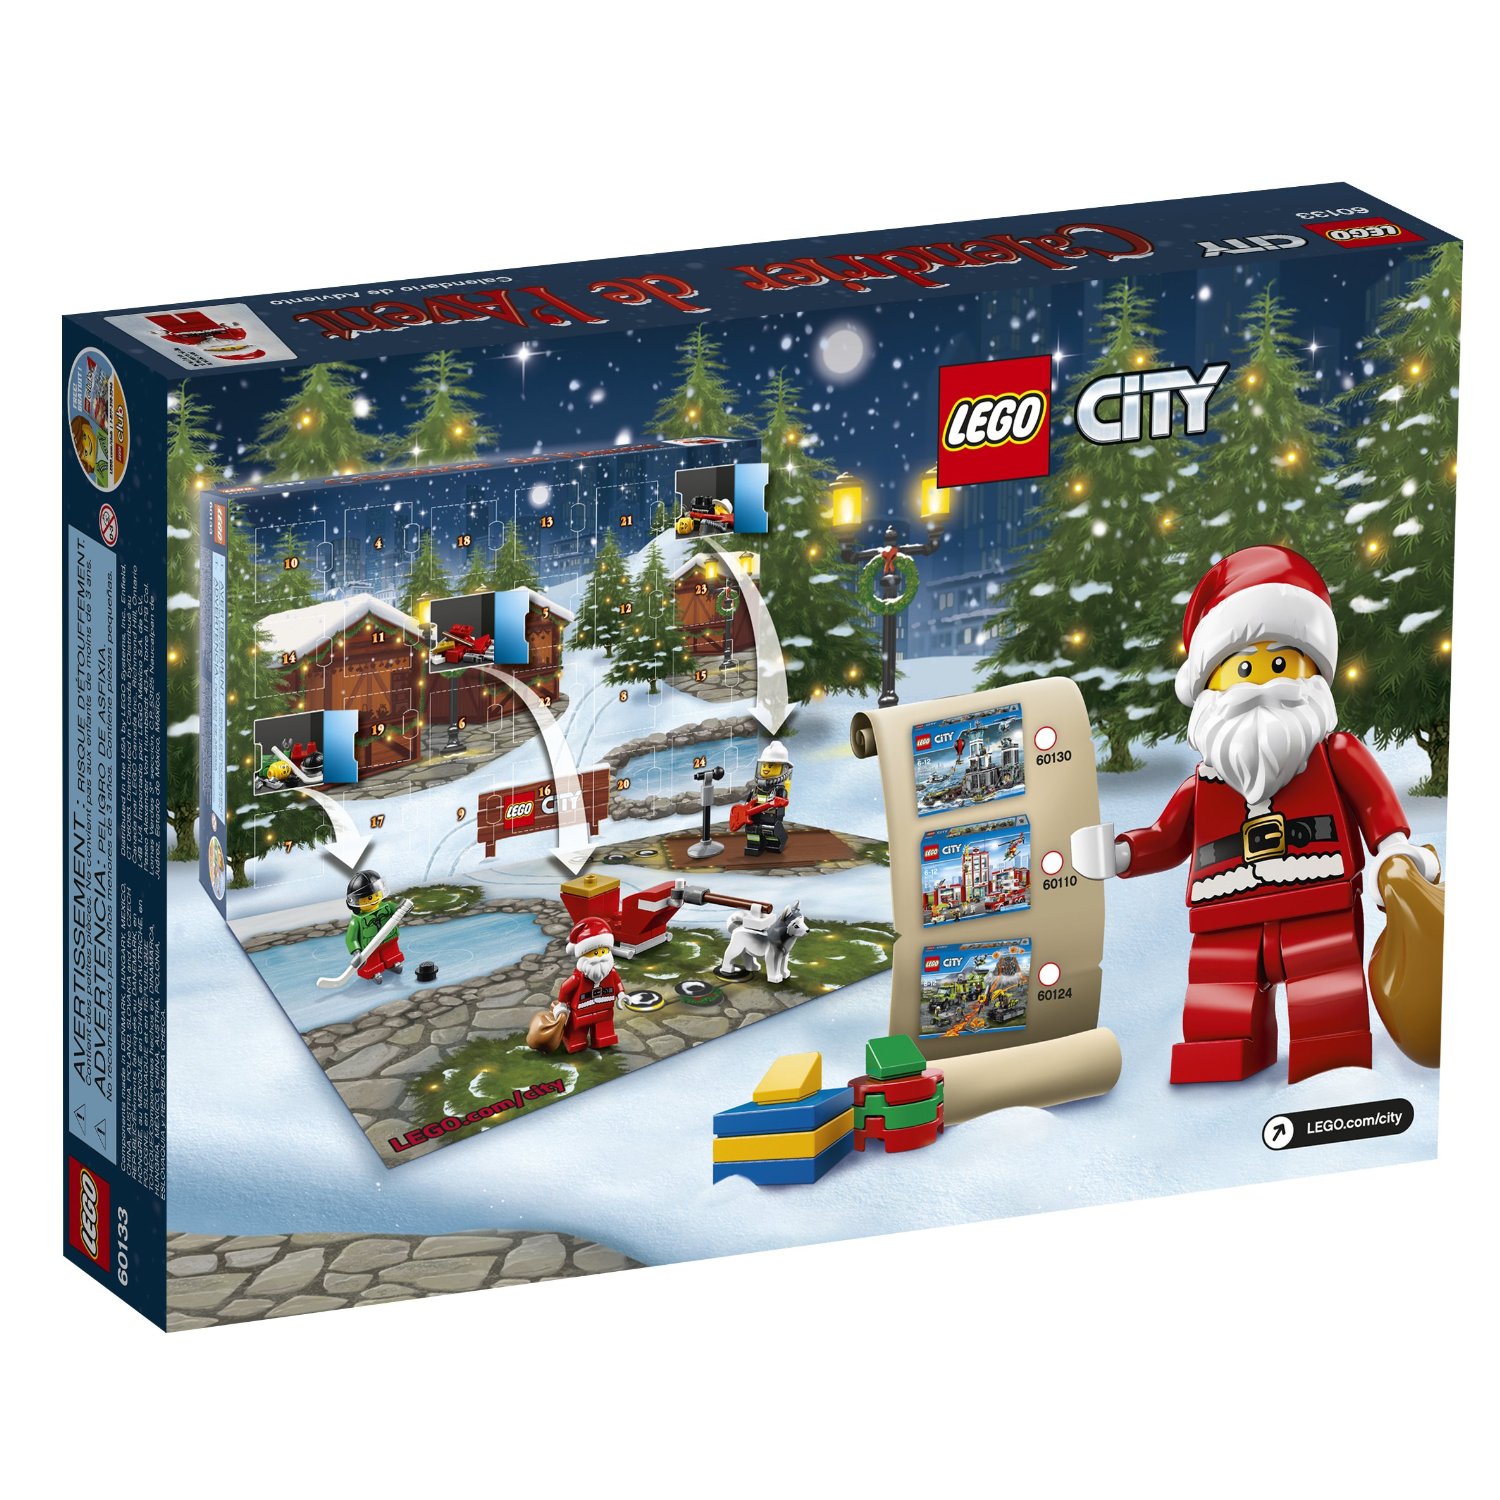 LEGO City Town 60133 Advent Calendar Building Kit